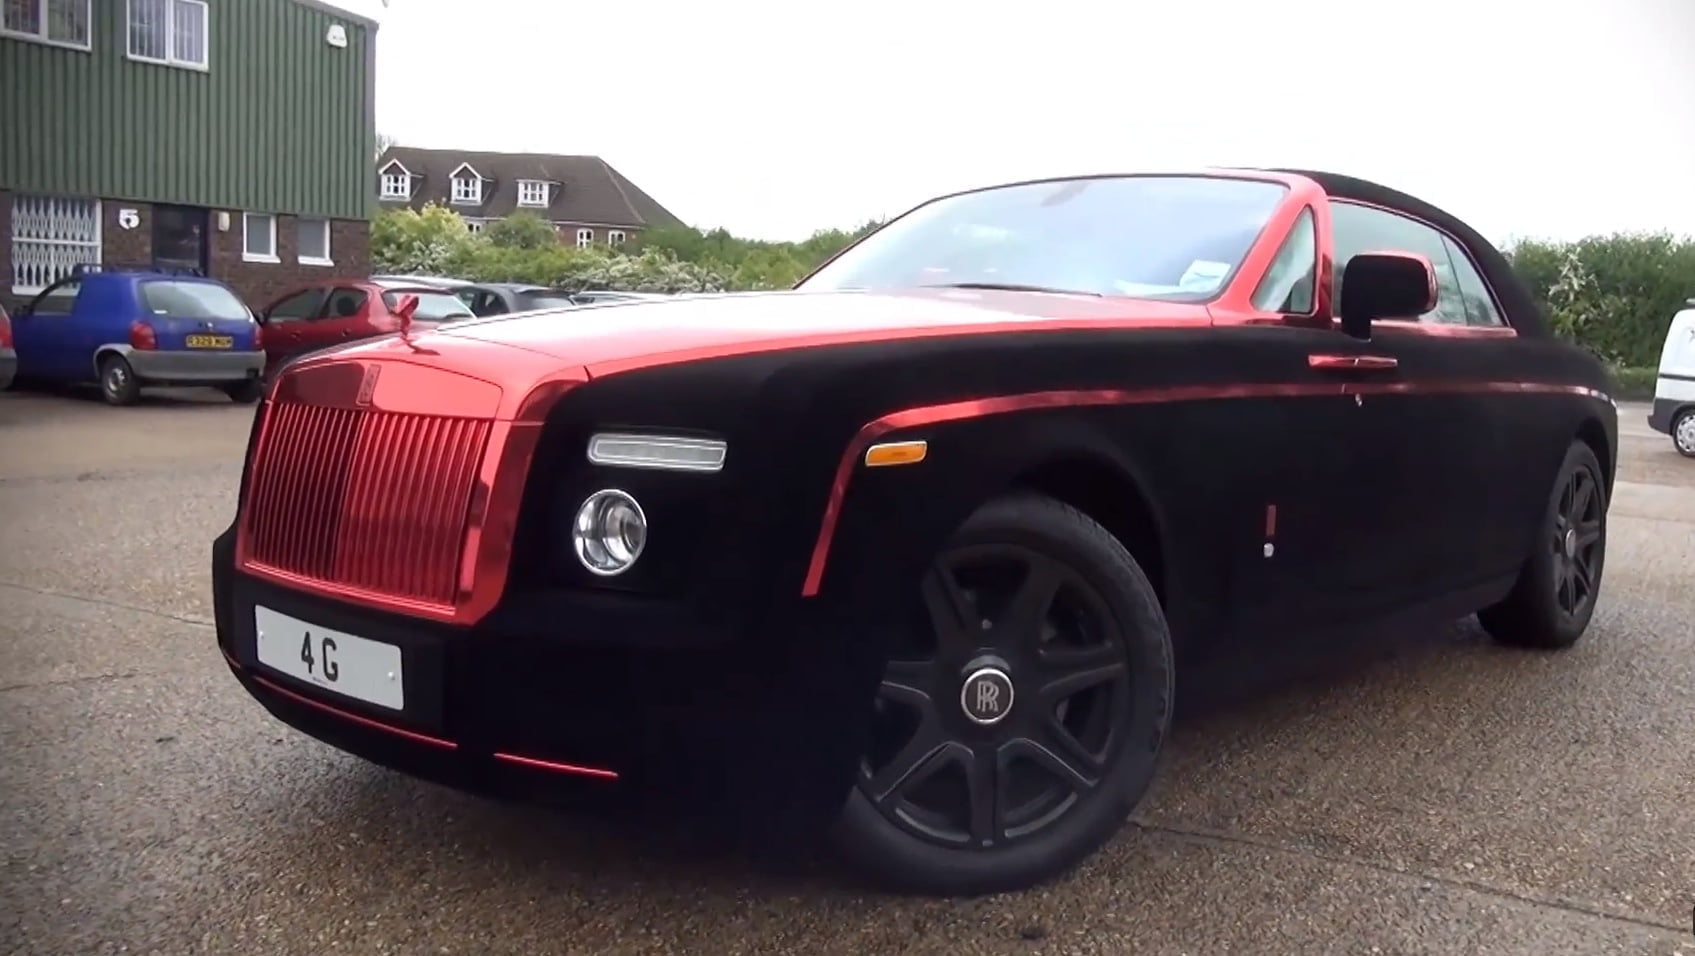 Rolls-Royce-Phantom-Coupe-Gumball-3000-video